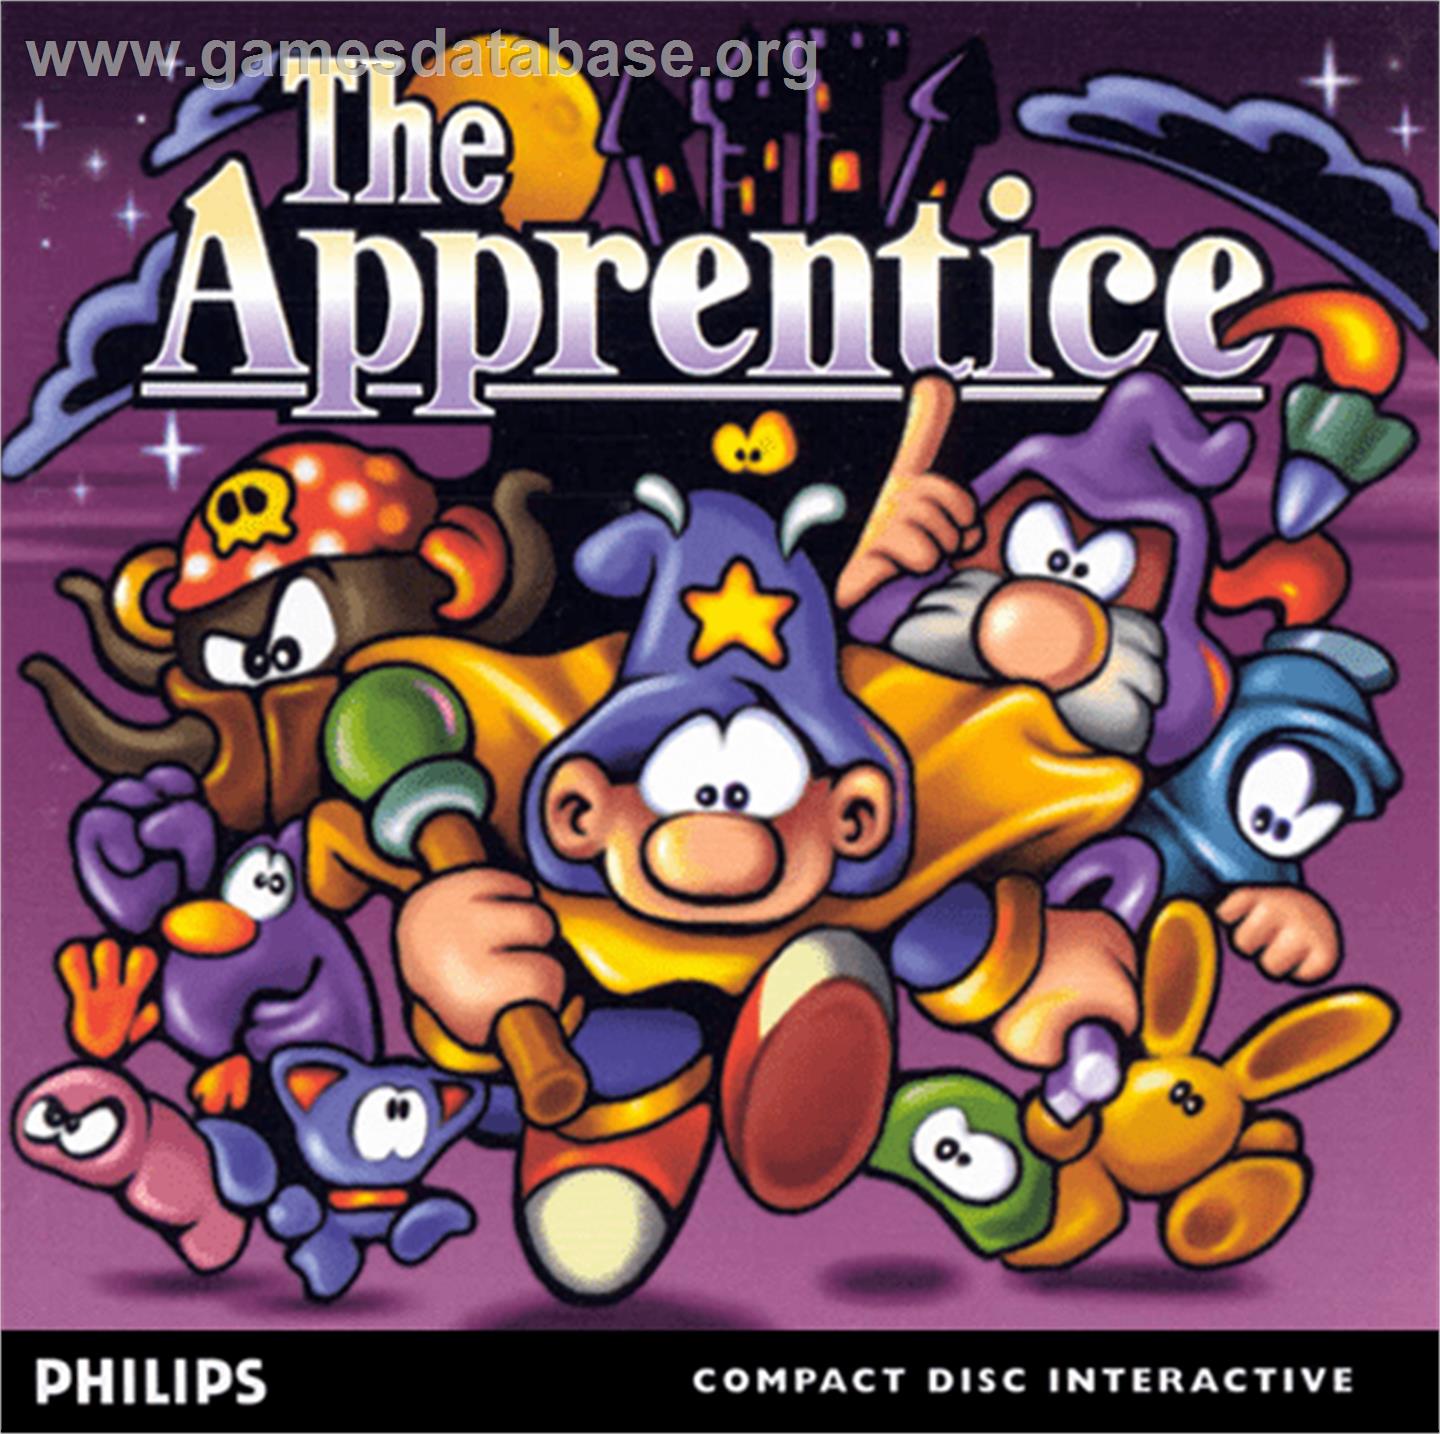 Apprentice - Philips CD-i - Artwork - Box